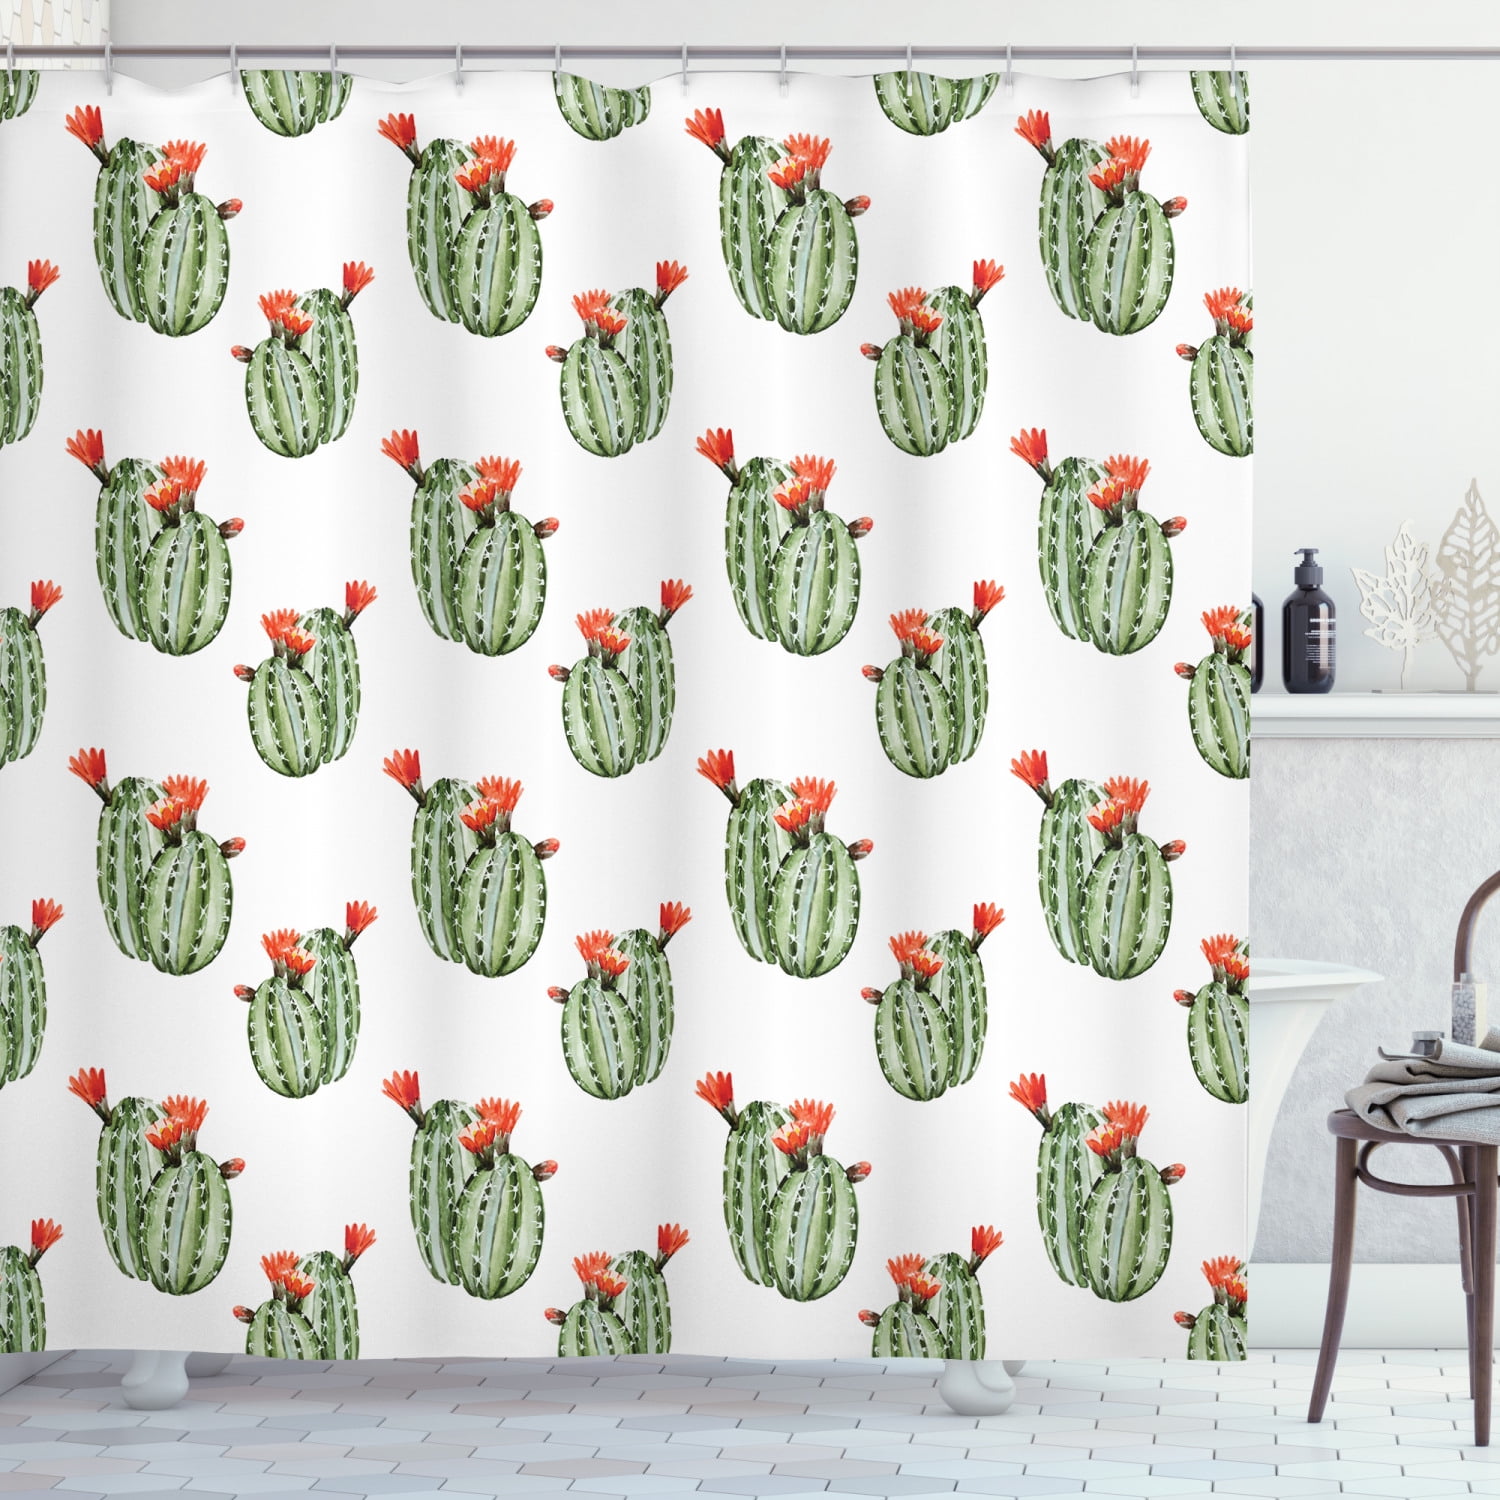 Green Cactus Orange Flowers Shower Curtain Liner Polyester Fabric Bathroom Hooks 